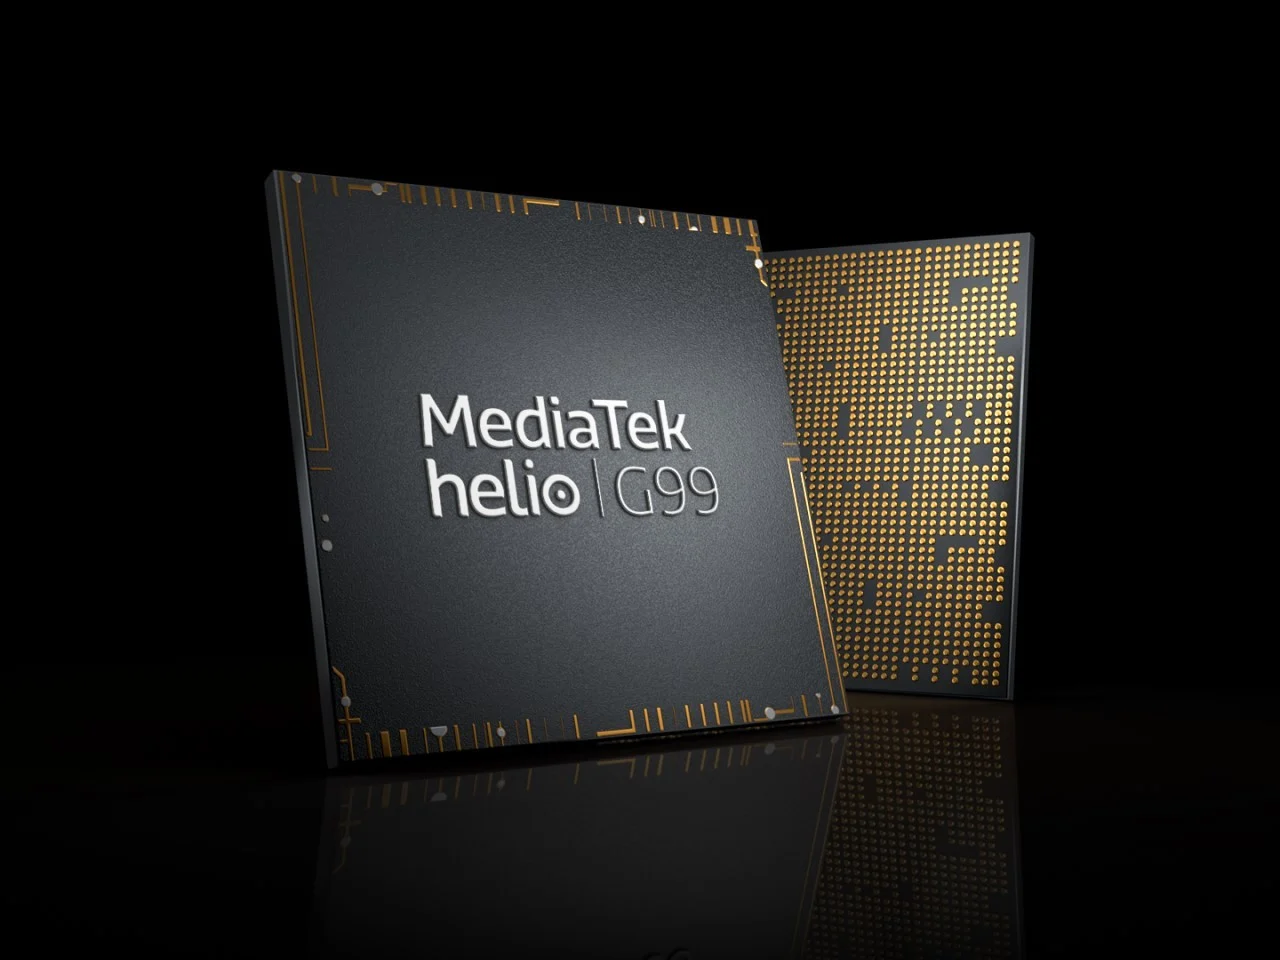 MediaTek Helio G99